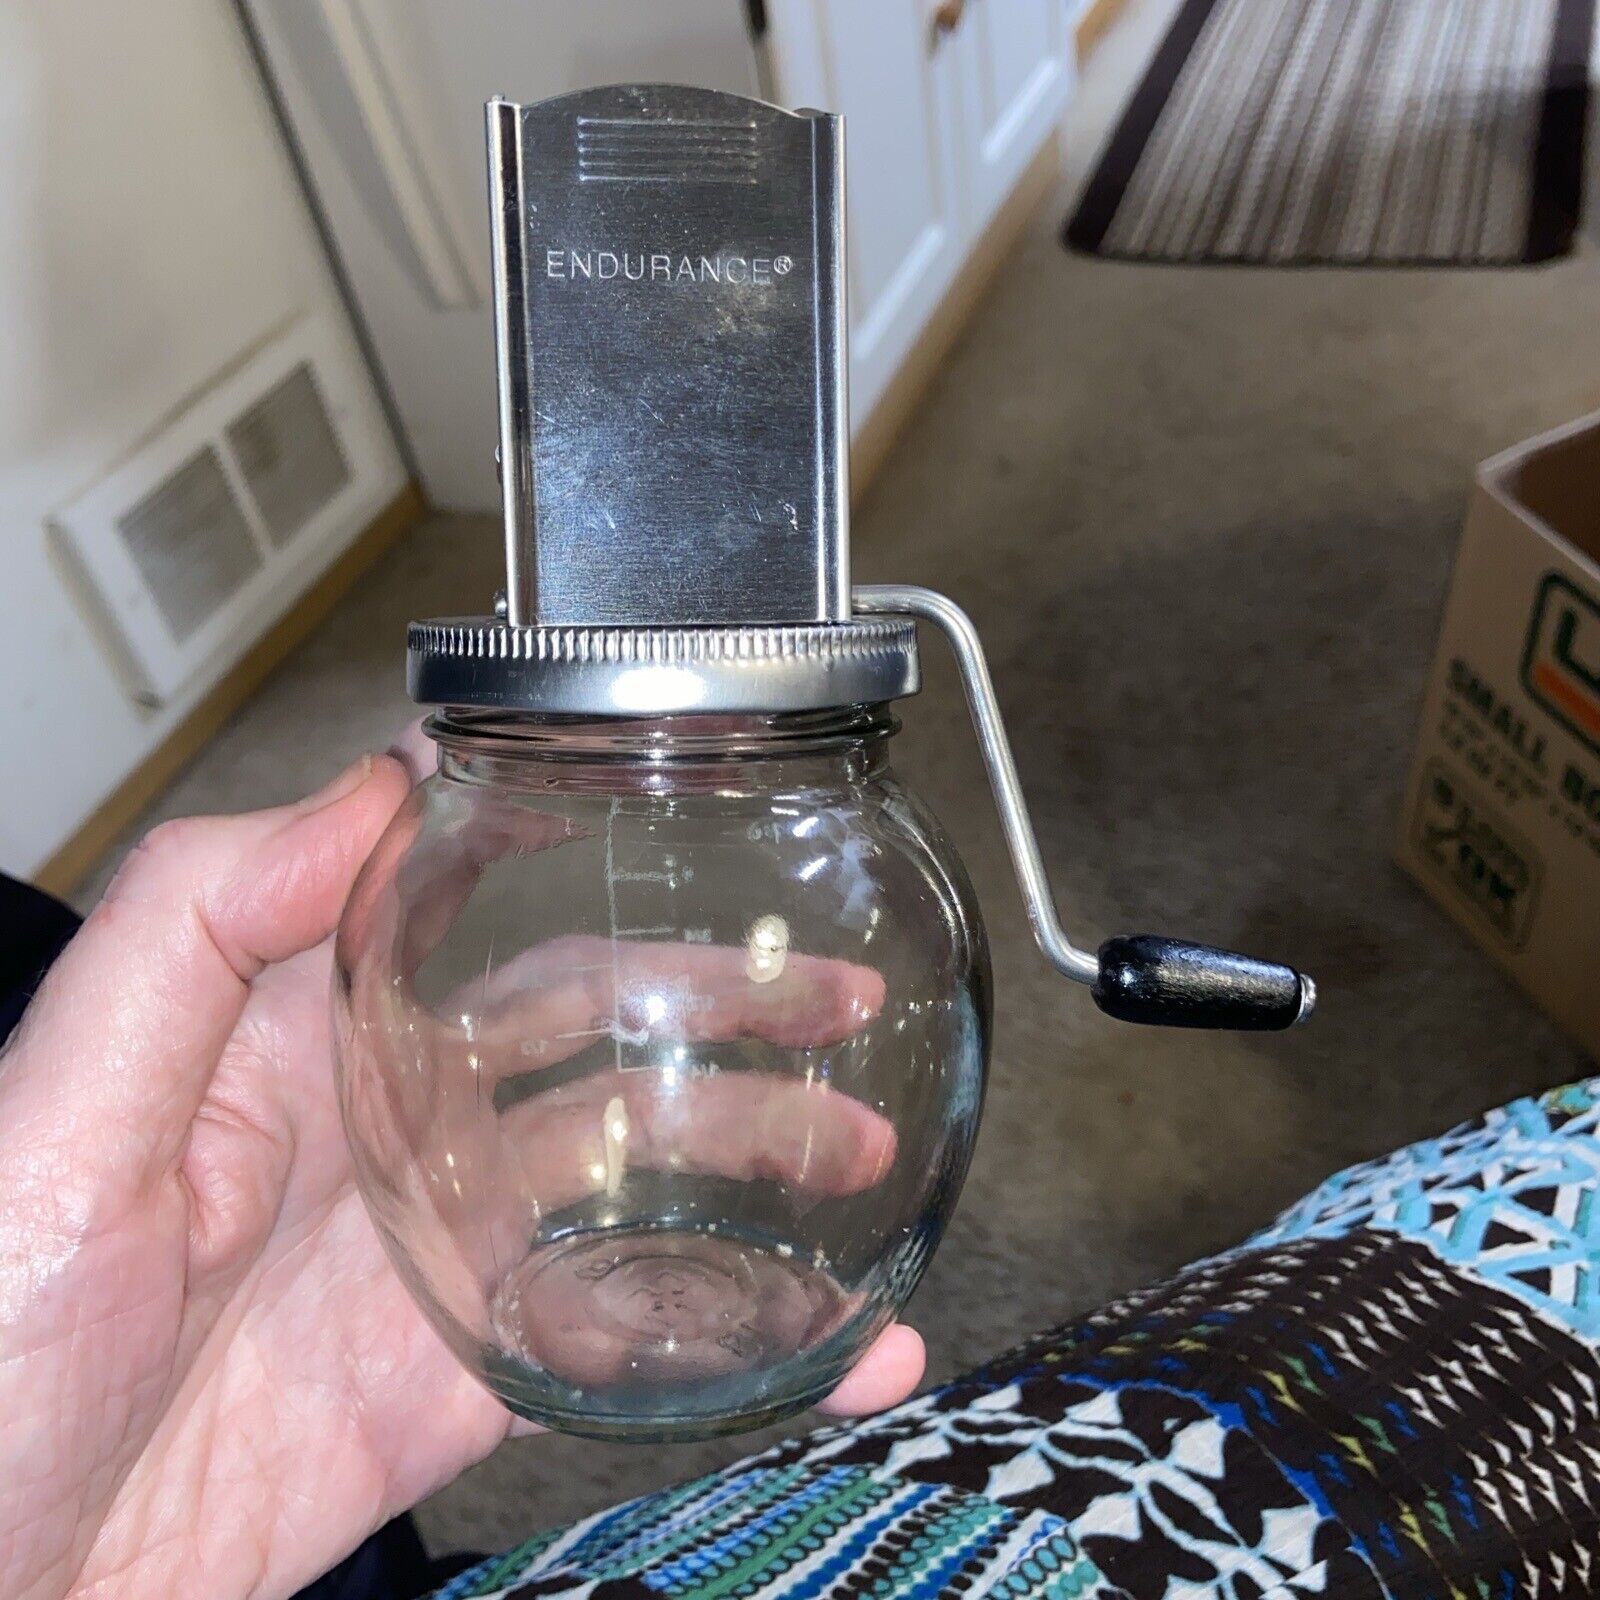 Endurance Vintage-Like Manual Nut Grinder - 1.25 Cup Capacity Jar